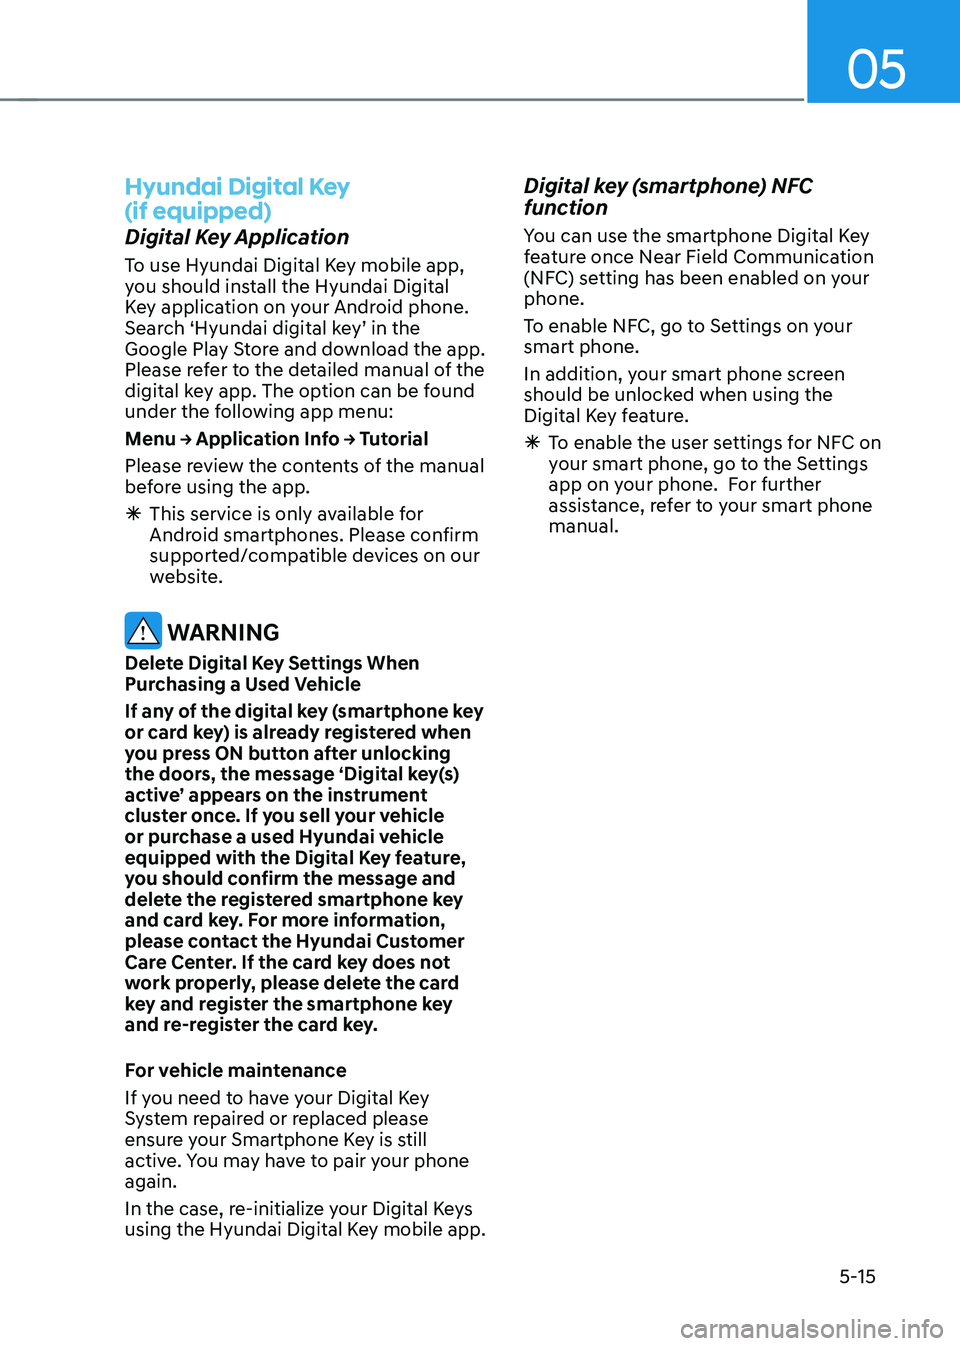 HYUNDAI TUCSON 2022  Owners Manual 05
5-15
Hyundai Digital Key  
(if equipped)
Digital Key Application
To use Hyundai Digital Key mobile app, 
you should install the Hyundai Digital 
Key application on your Android phone. 
Search ‘Hy